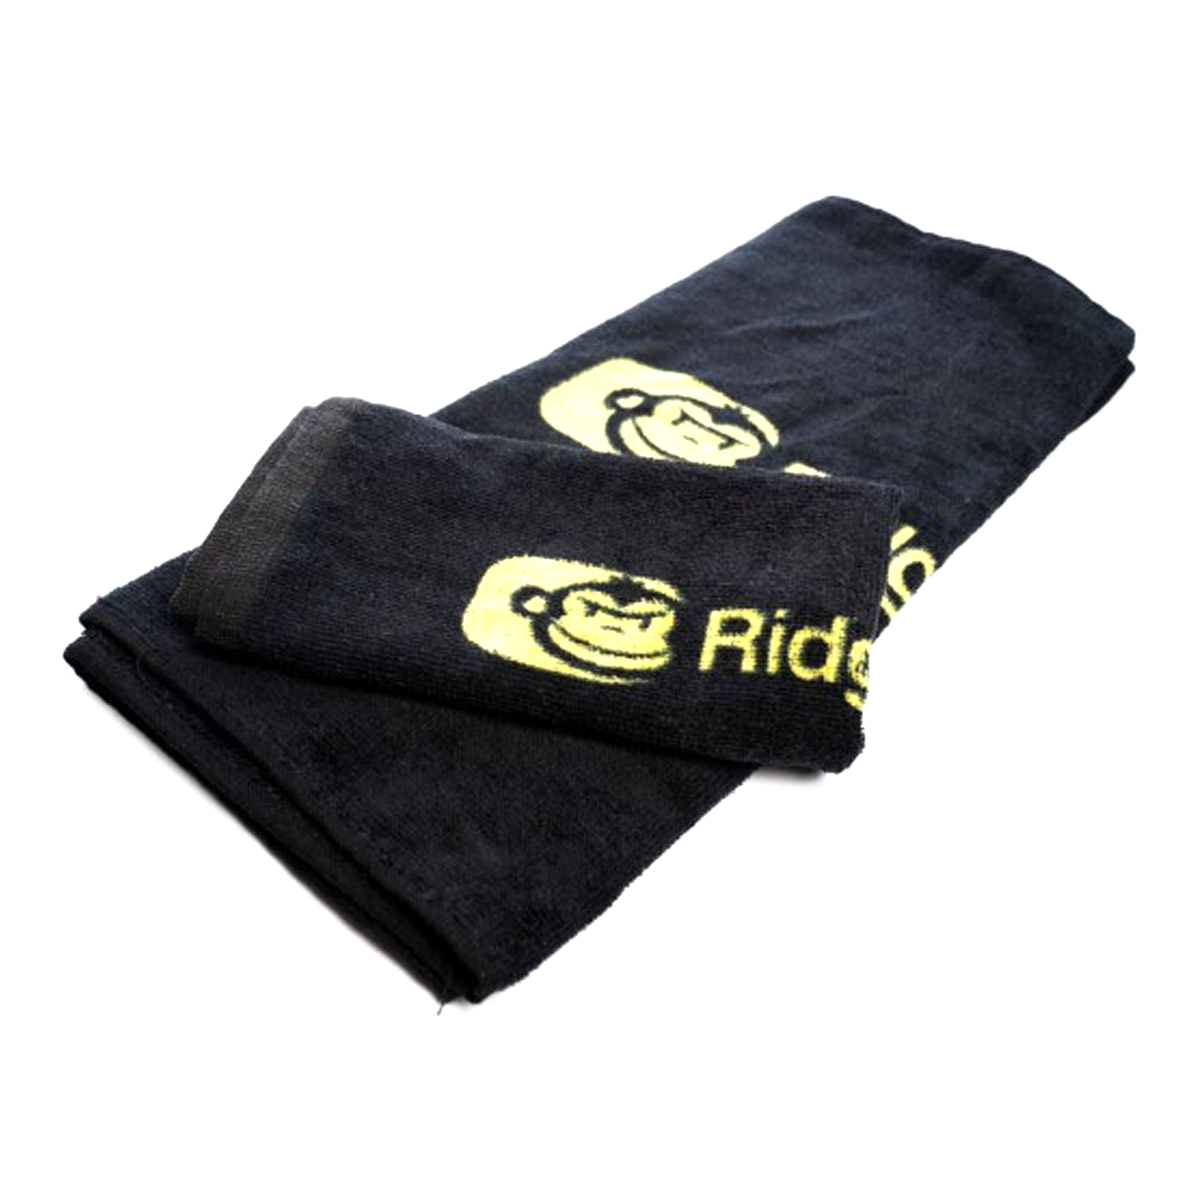 Ridgemonkey LX Hand Towel Set